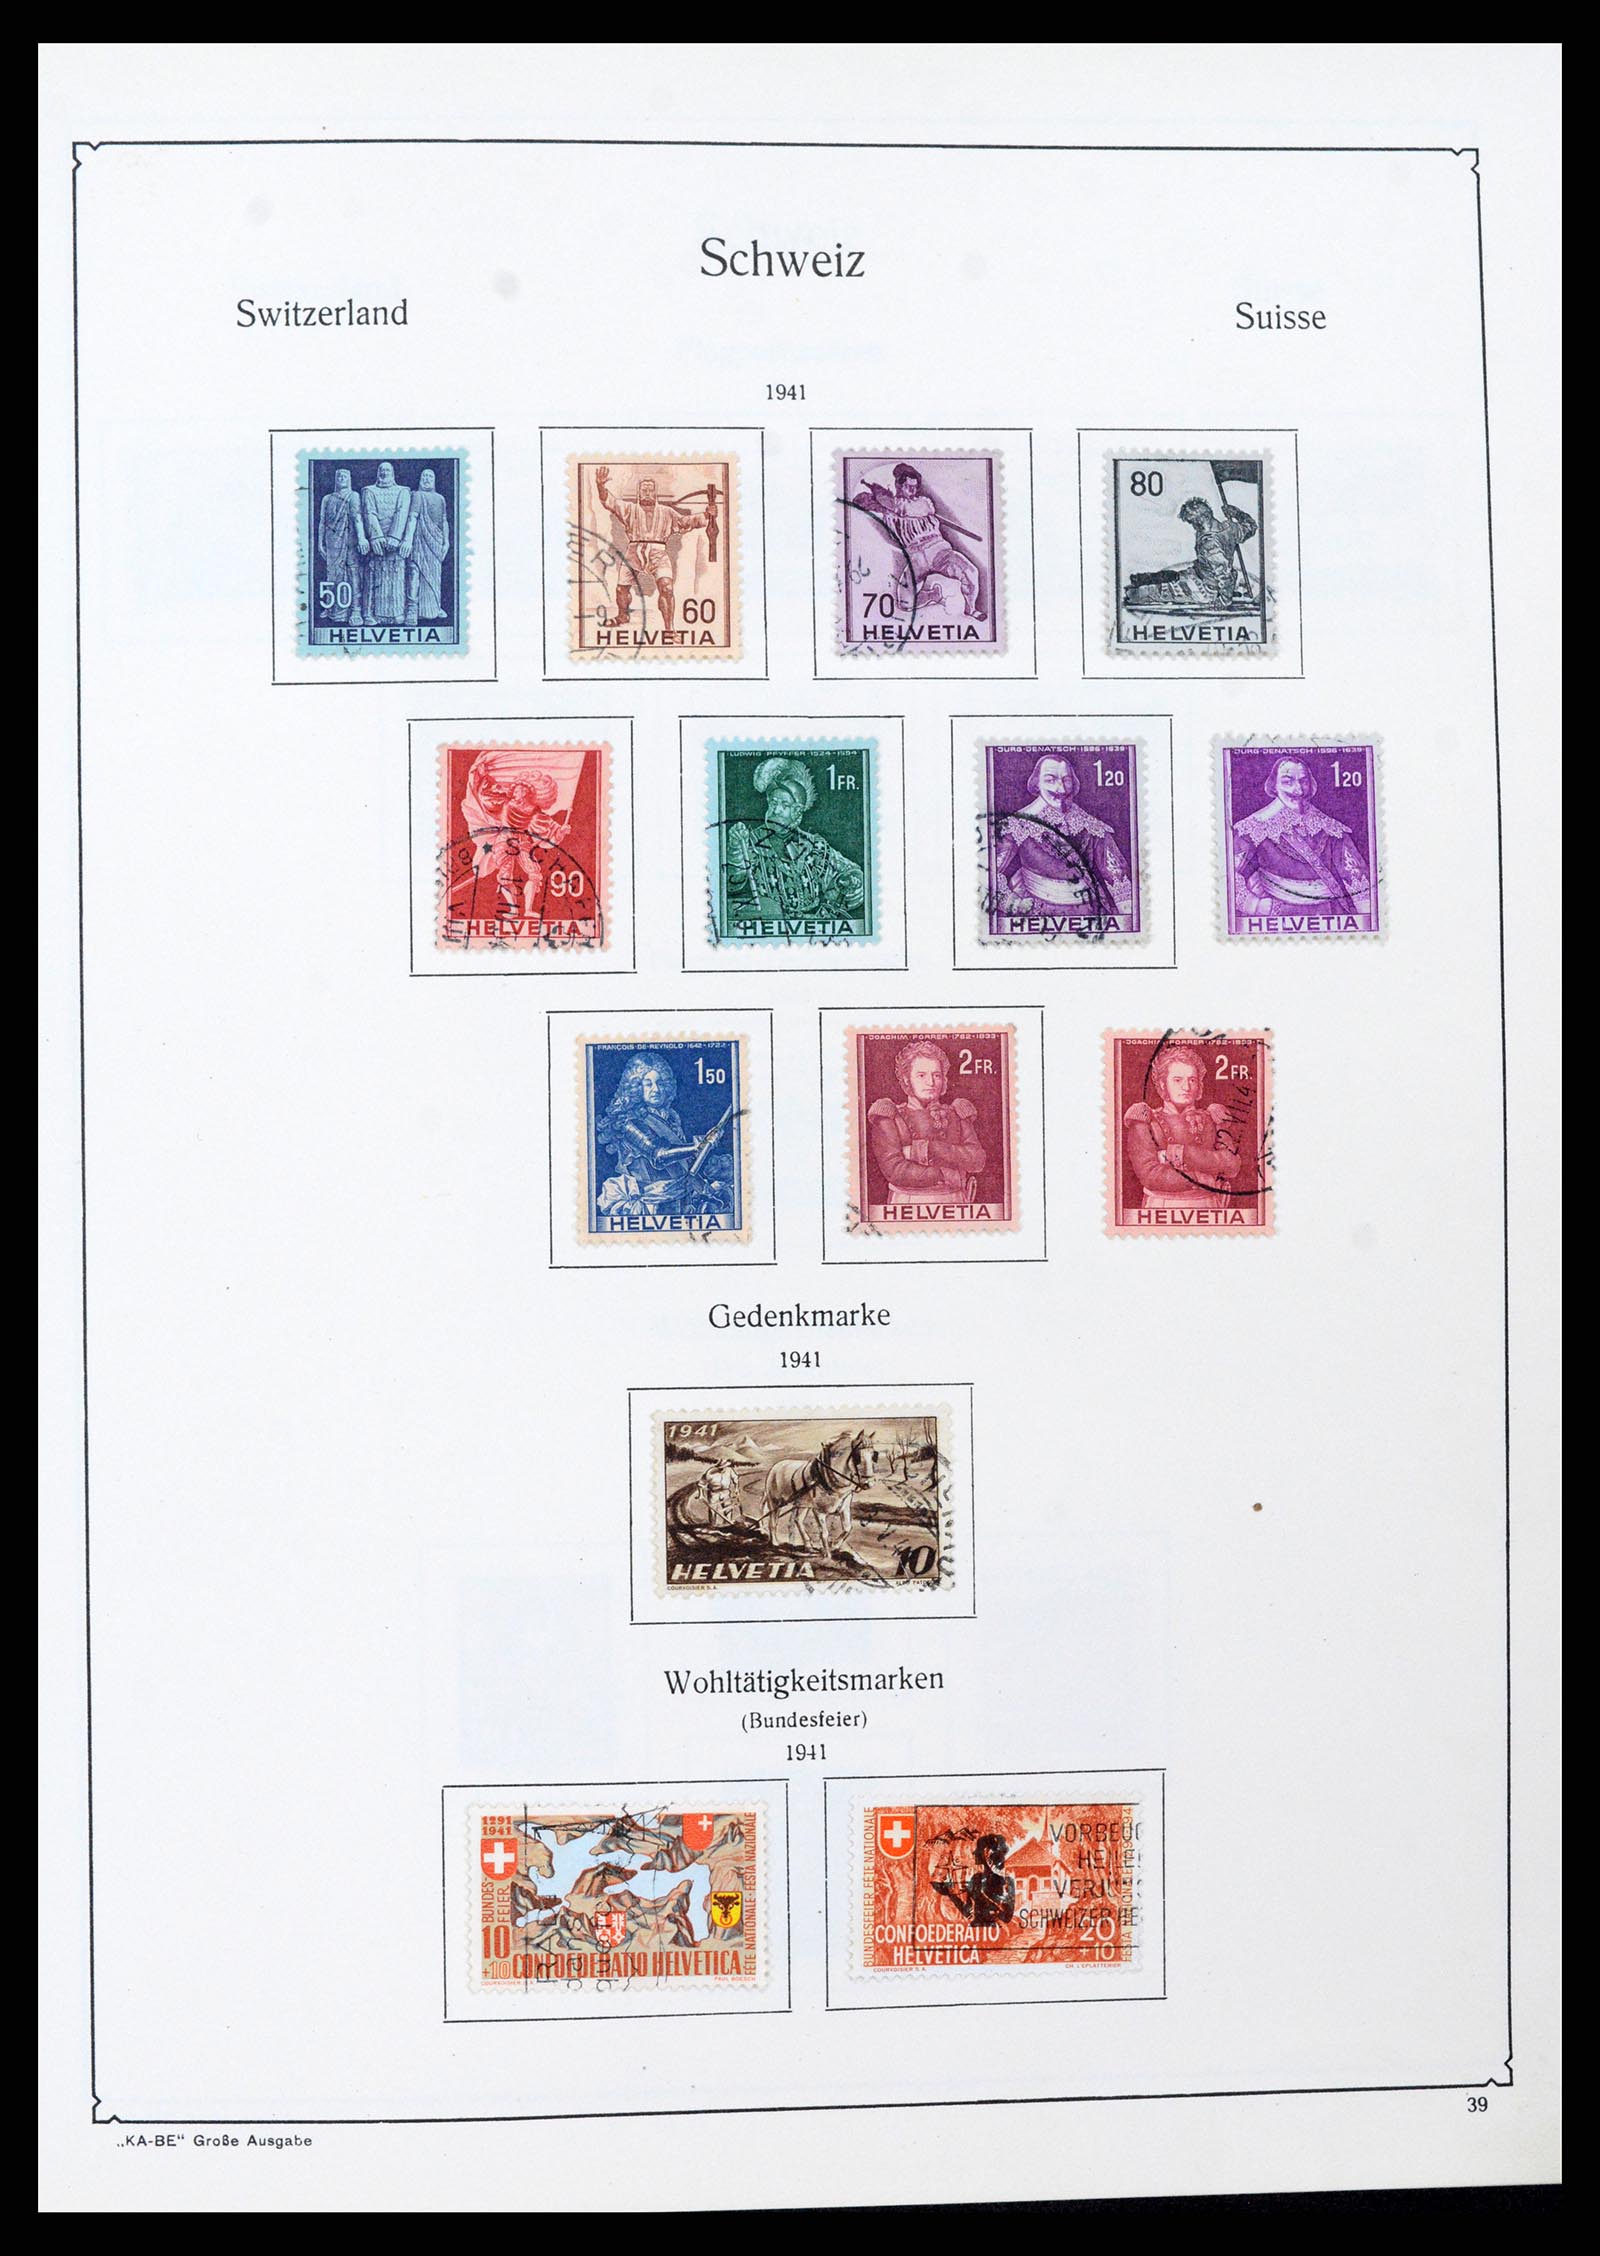 37588 038 - Stamp collection 37588 Switzerland 1854-1974.